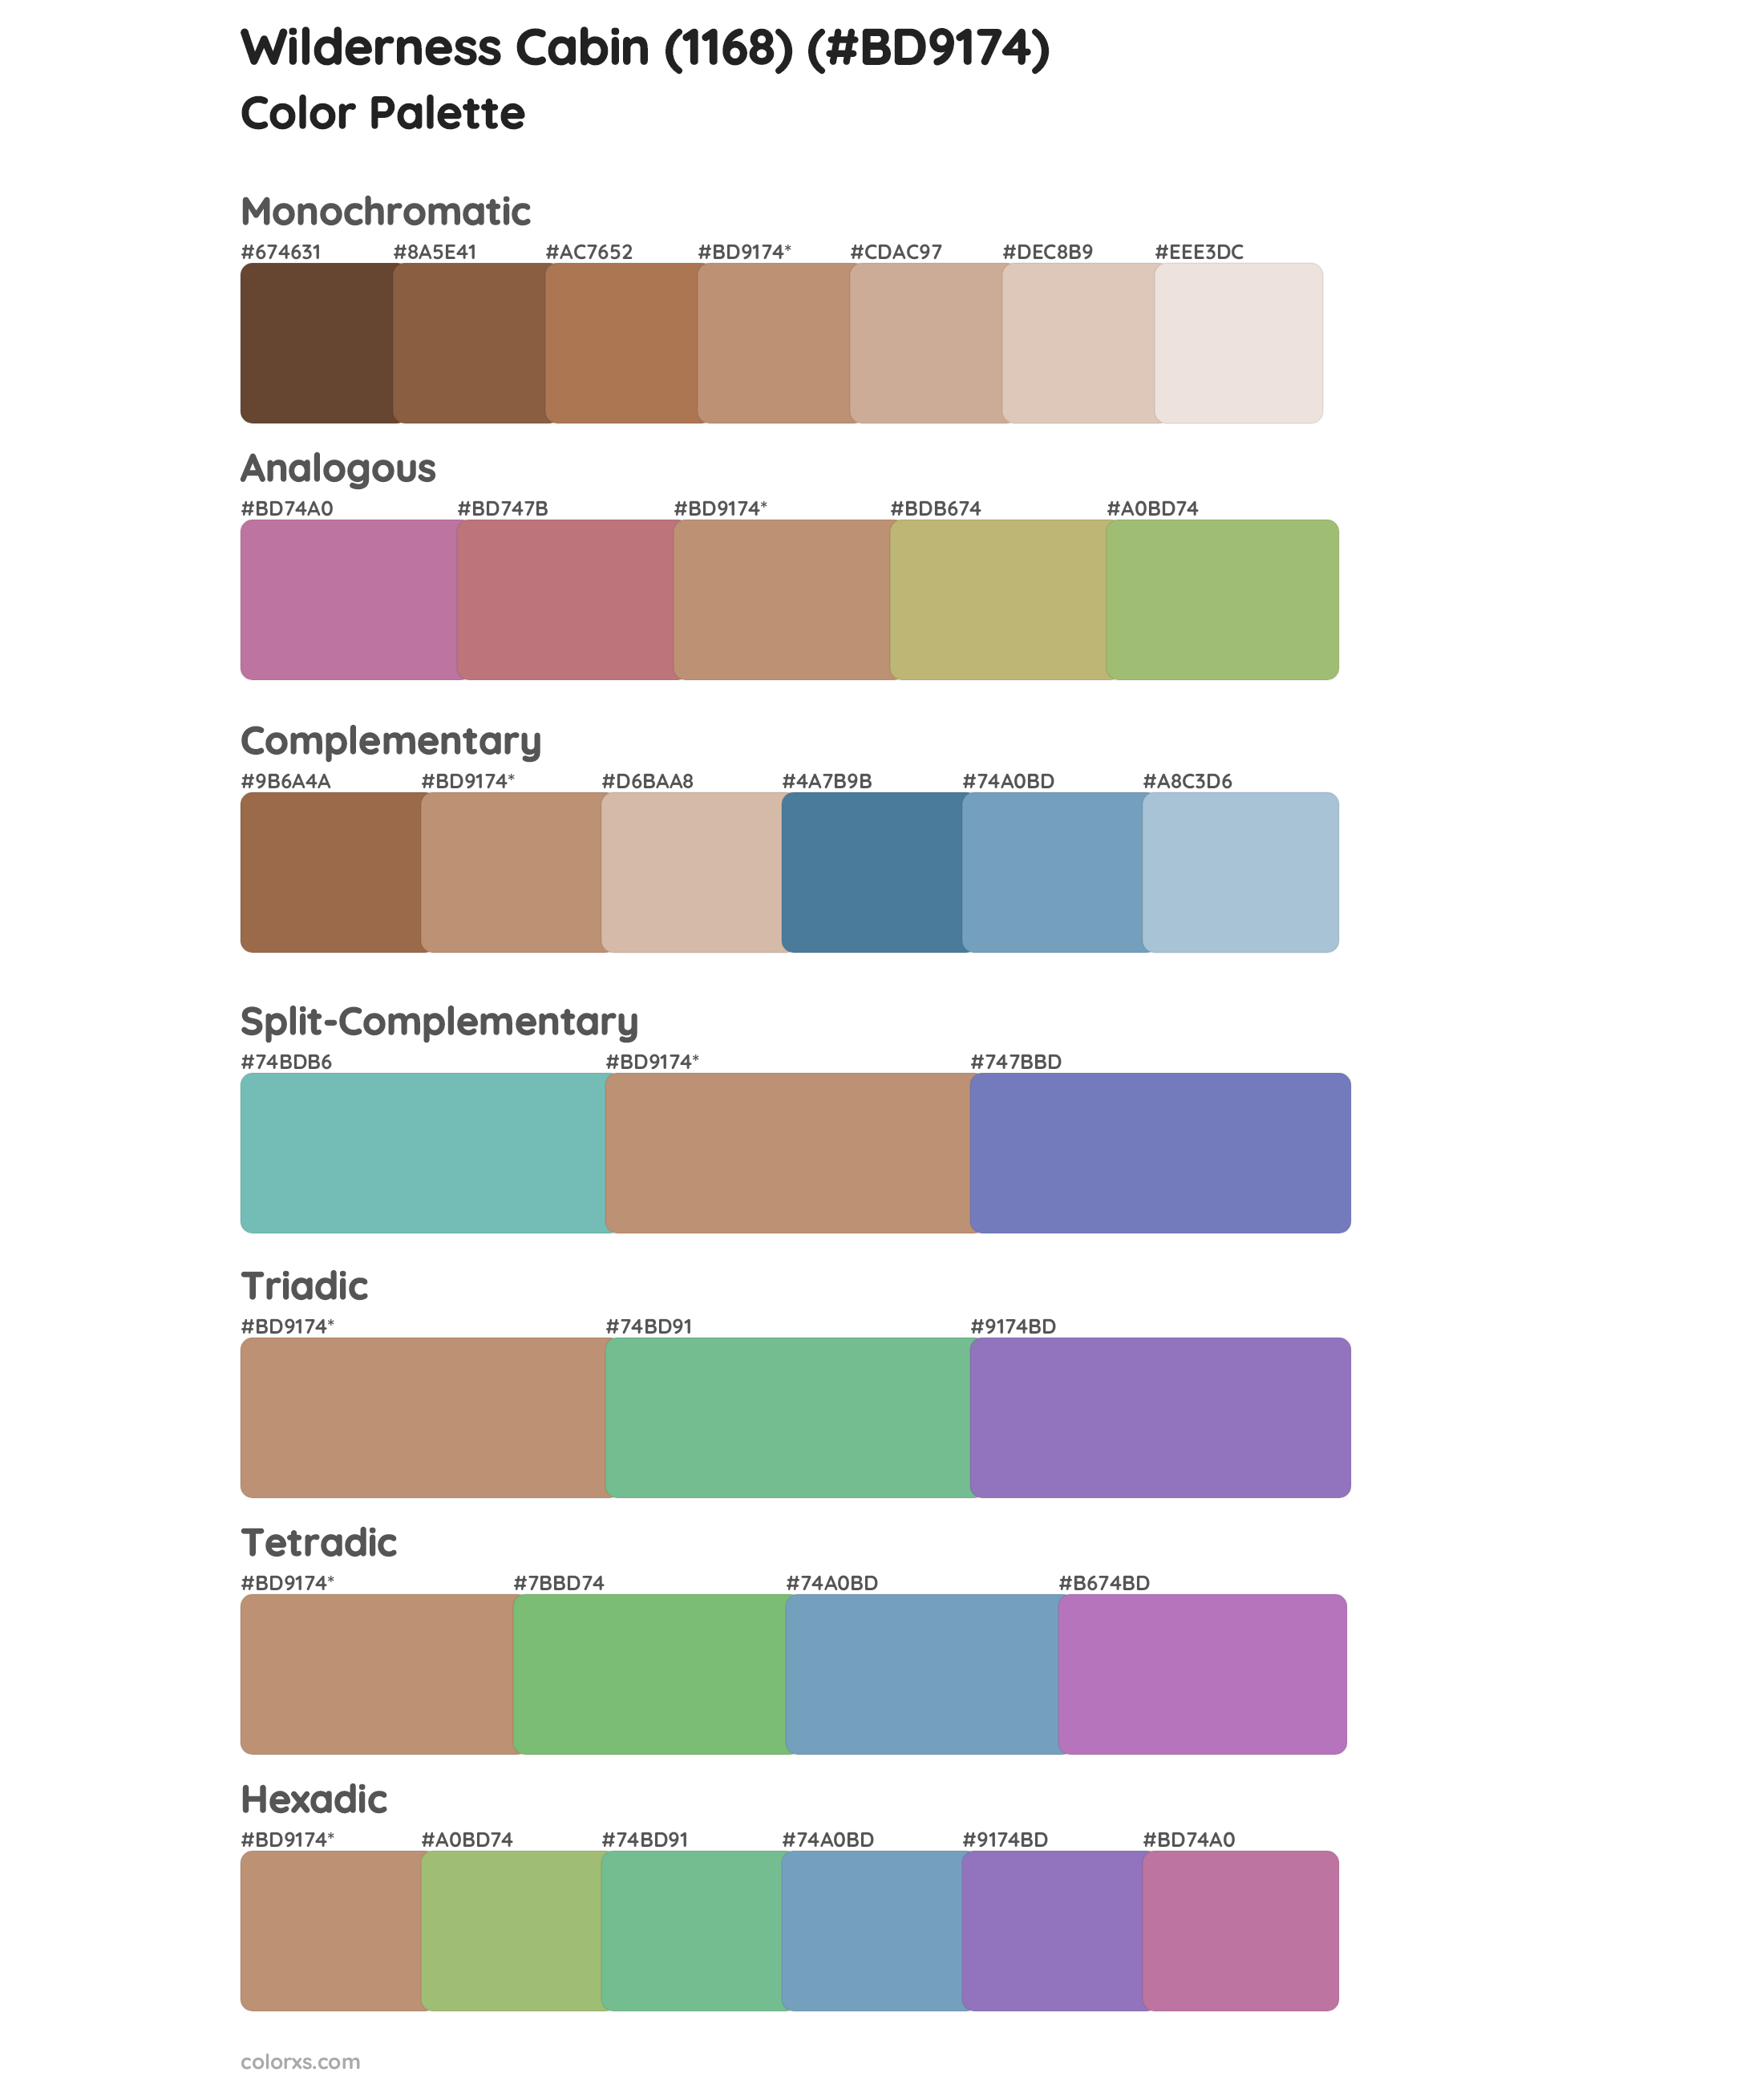 Wilderness Cabin (1168) Color Scheme Palettes